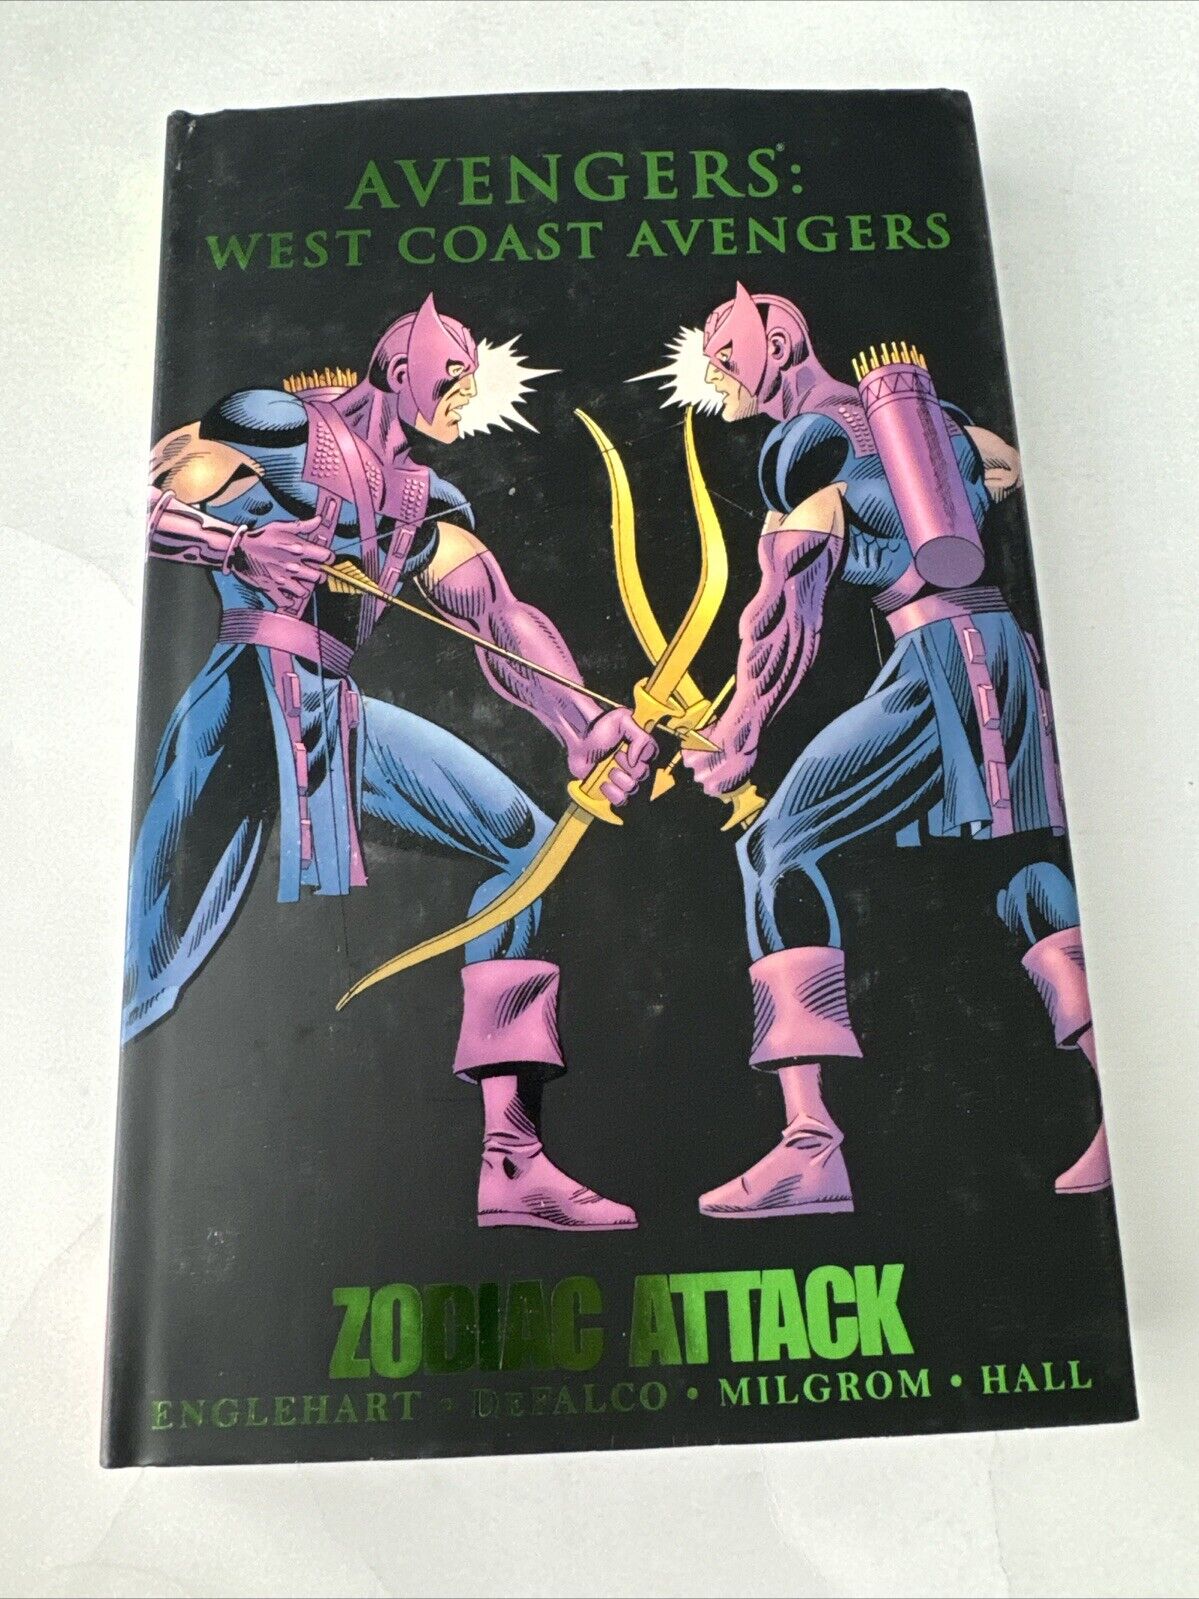 West Coast Avengers Zodiac Attack HC Premiere Edition Still Sealed